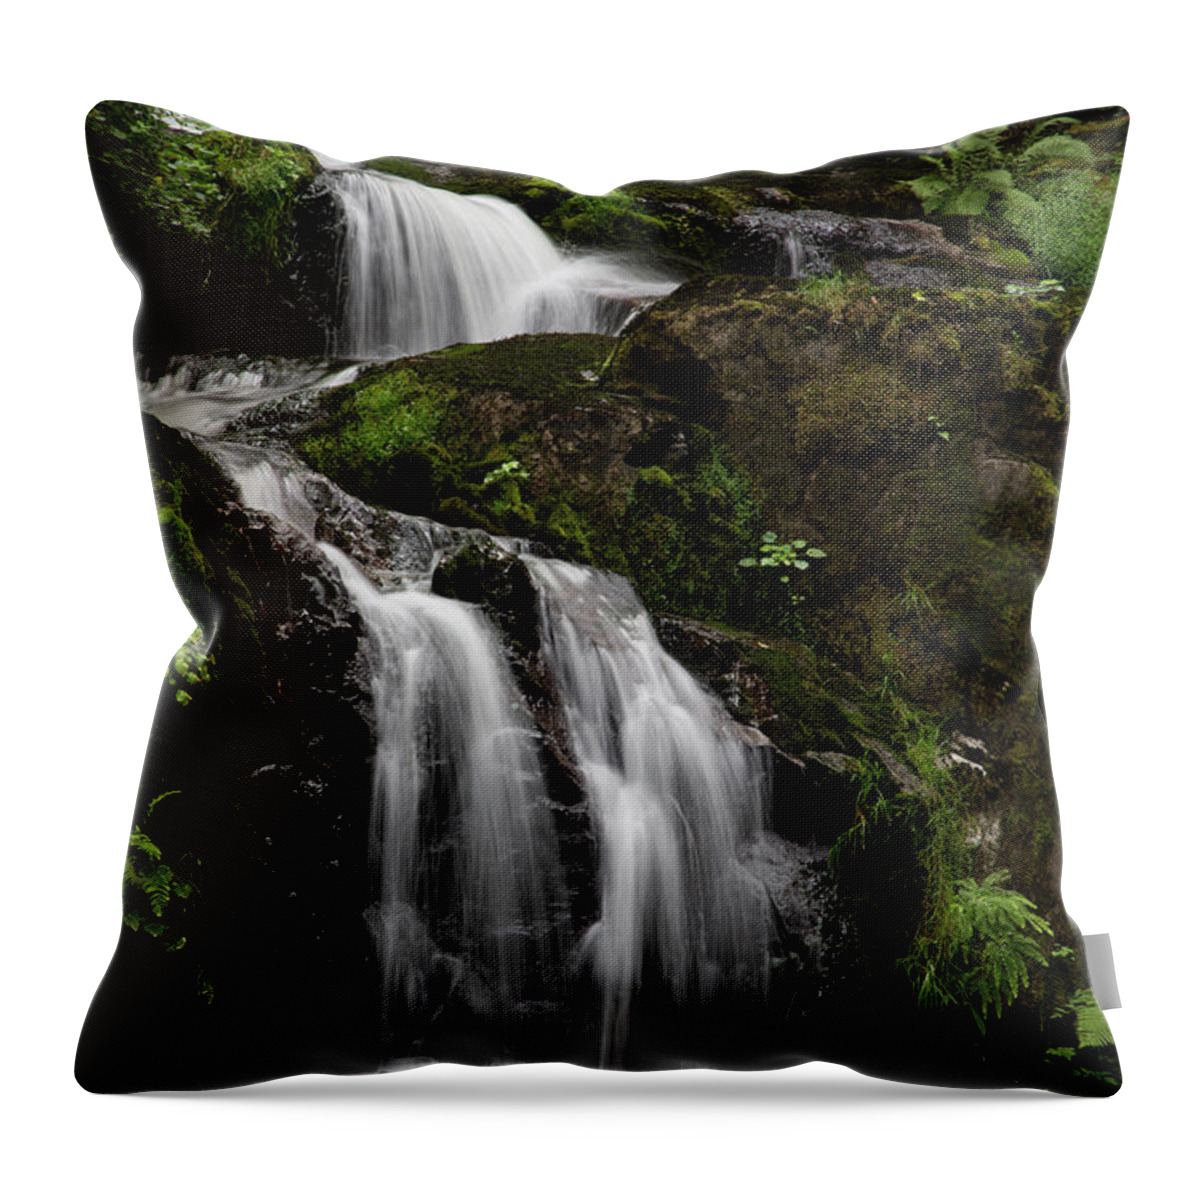 Waterfalls Throw Pillow featuring the digital art Steelhead Falls by Phil Dyer